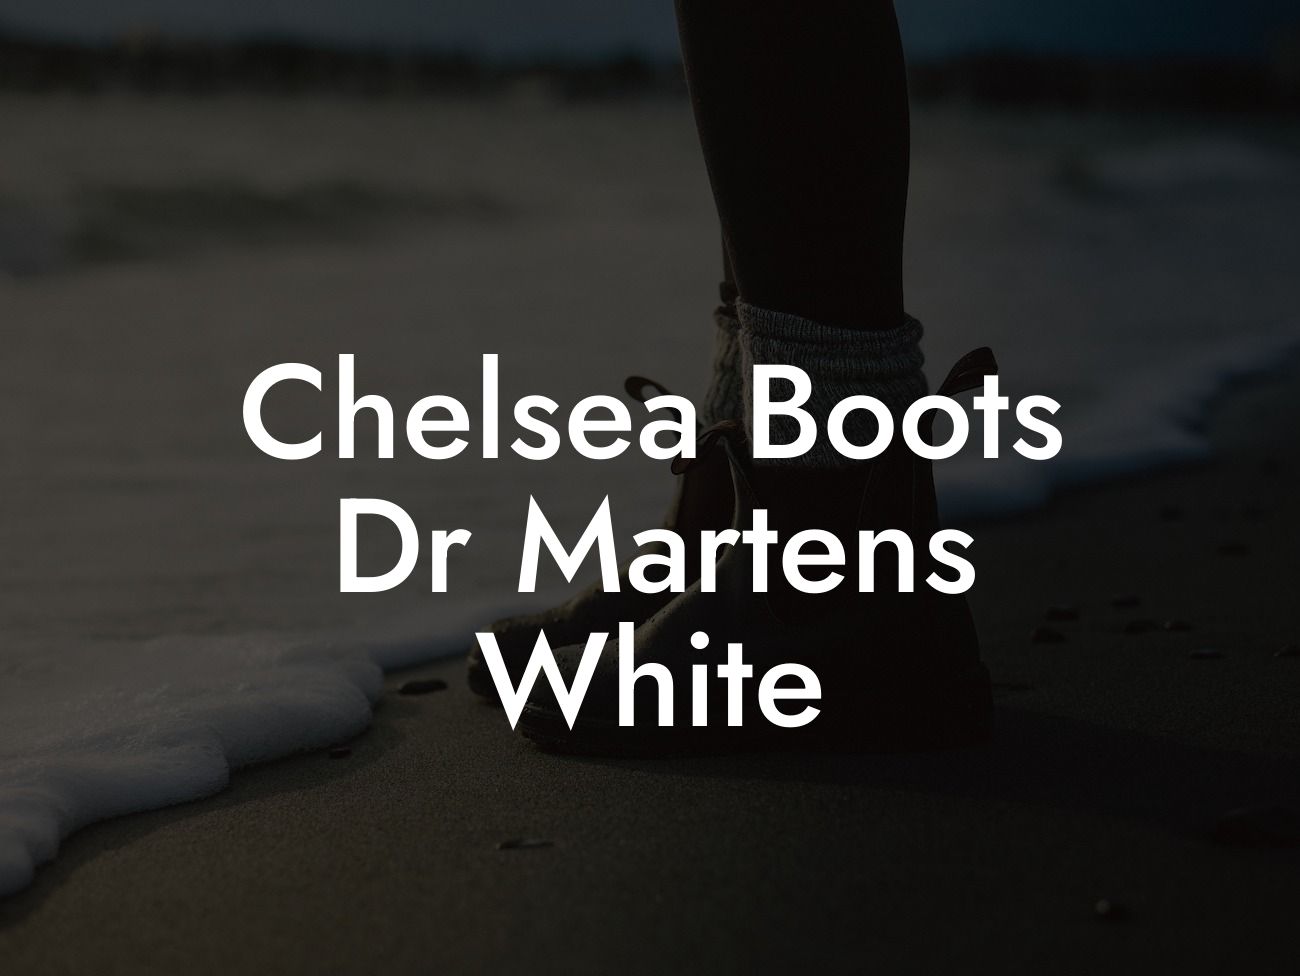 Chelsea Boots Dr Martens White